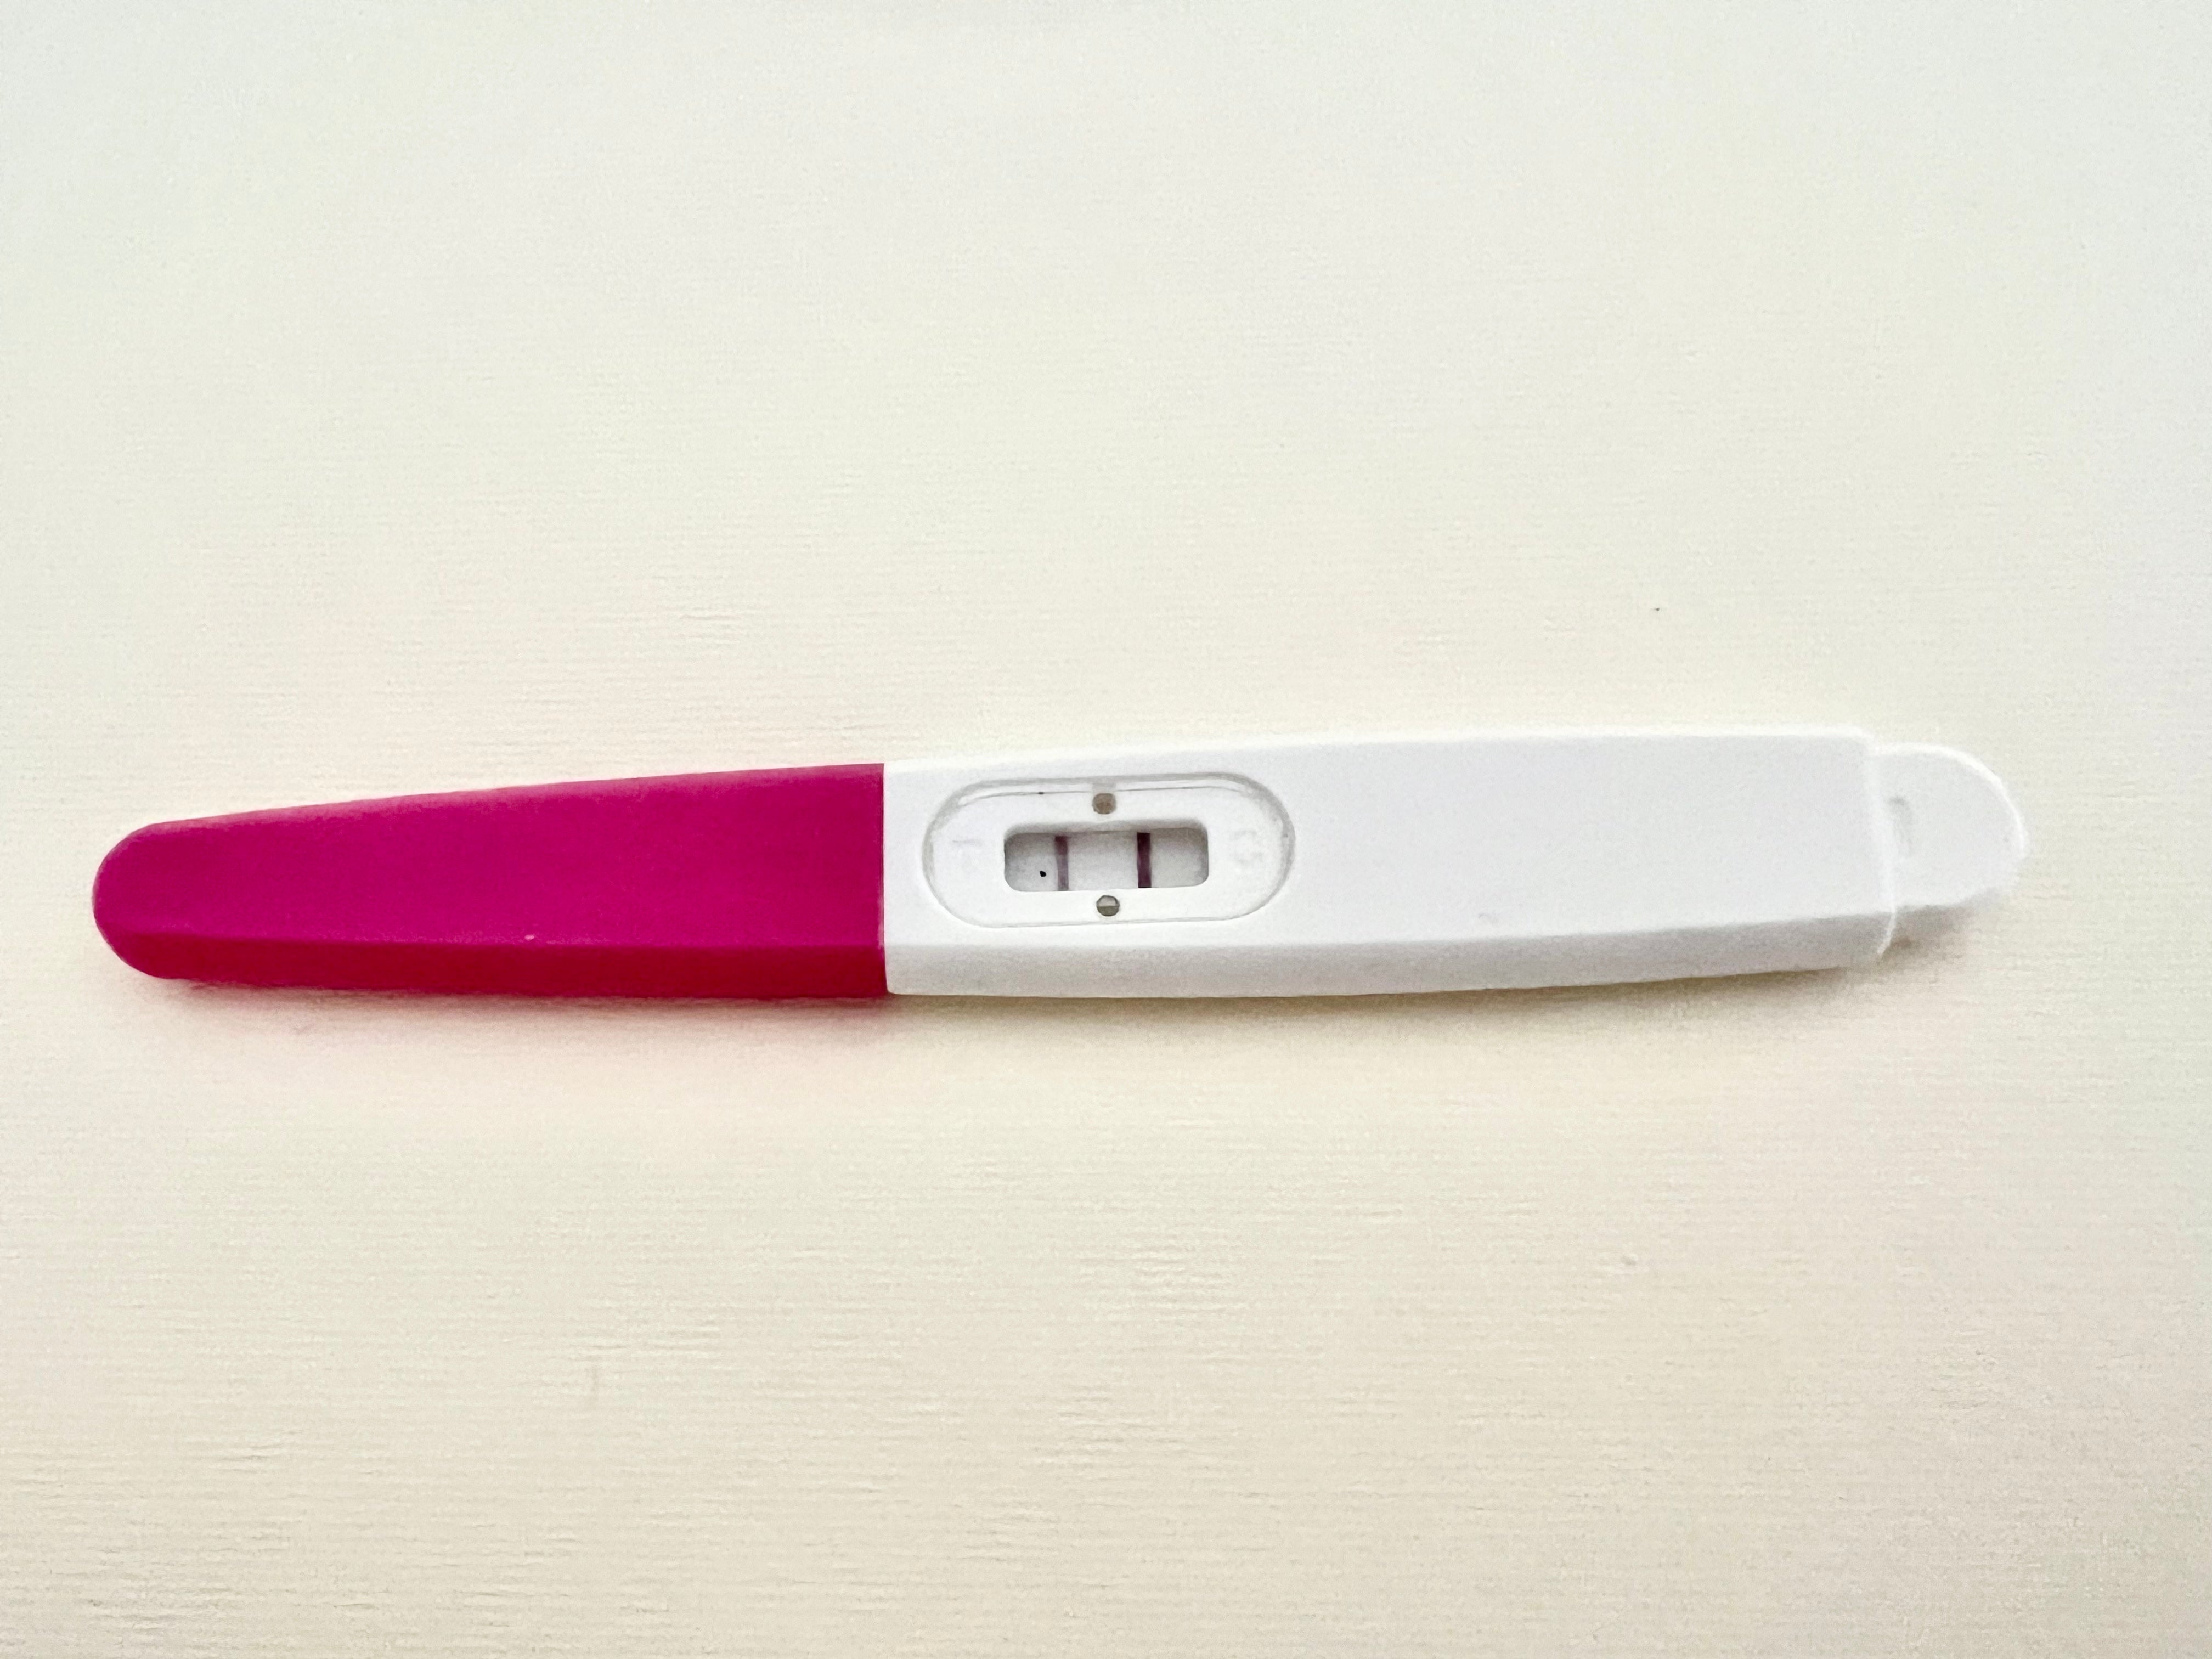 Gravidtid Early Pregnancy Test Stick pcs.